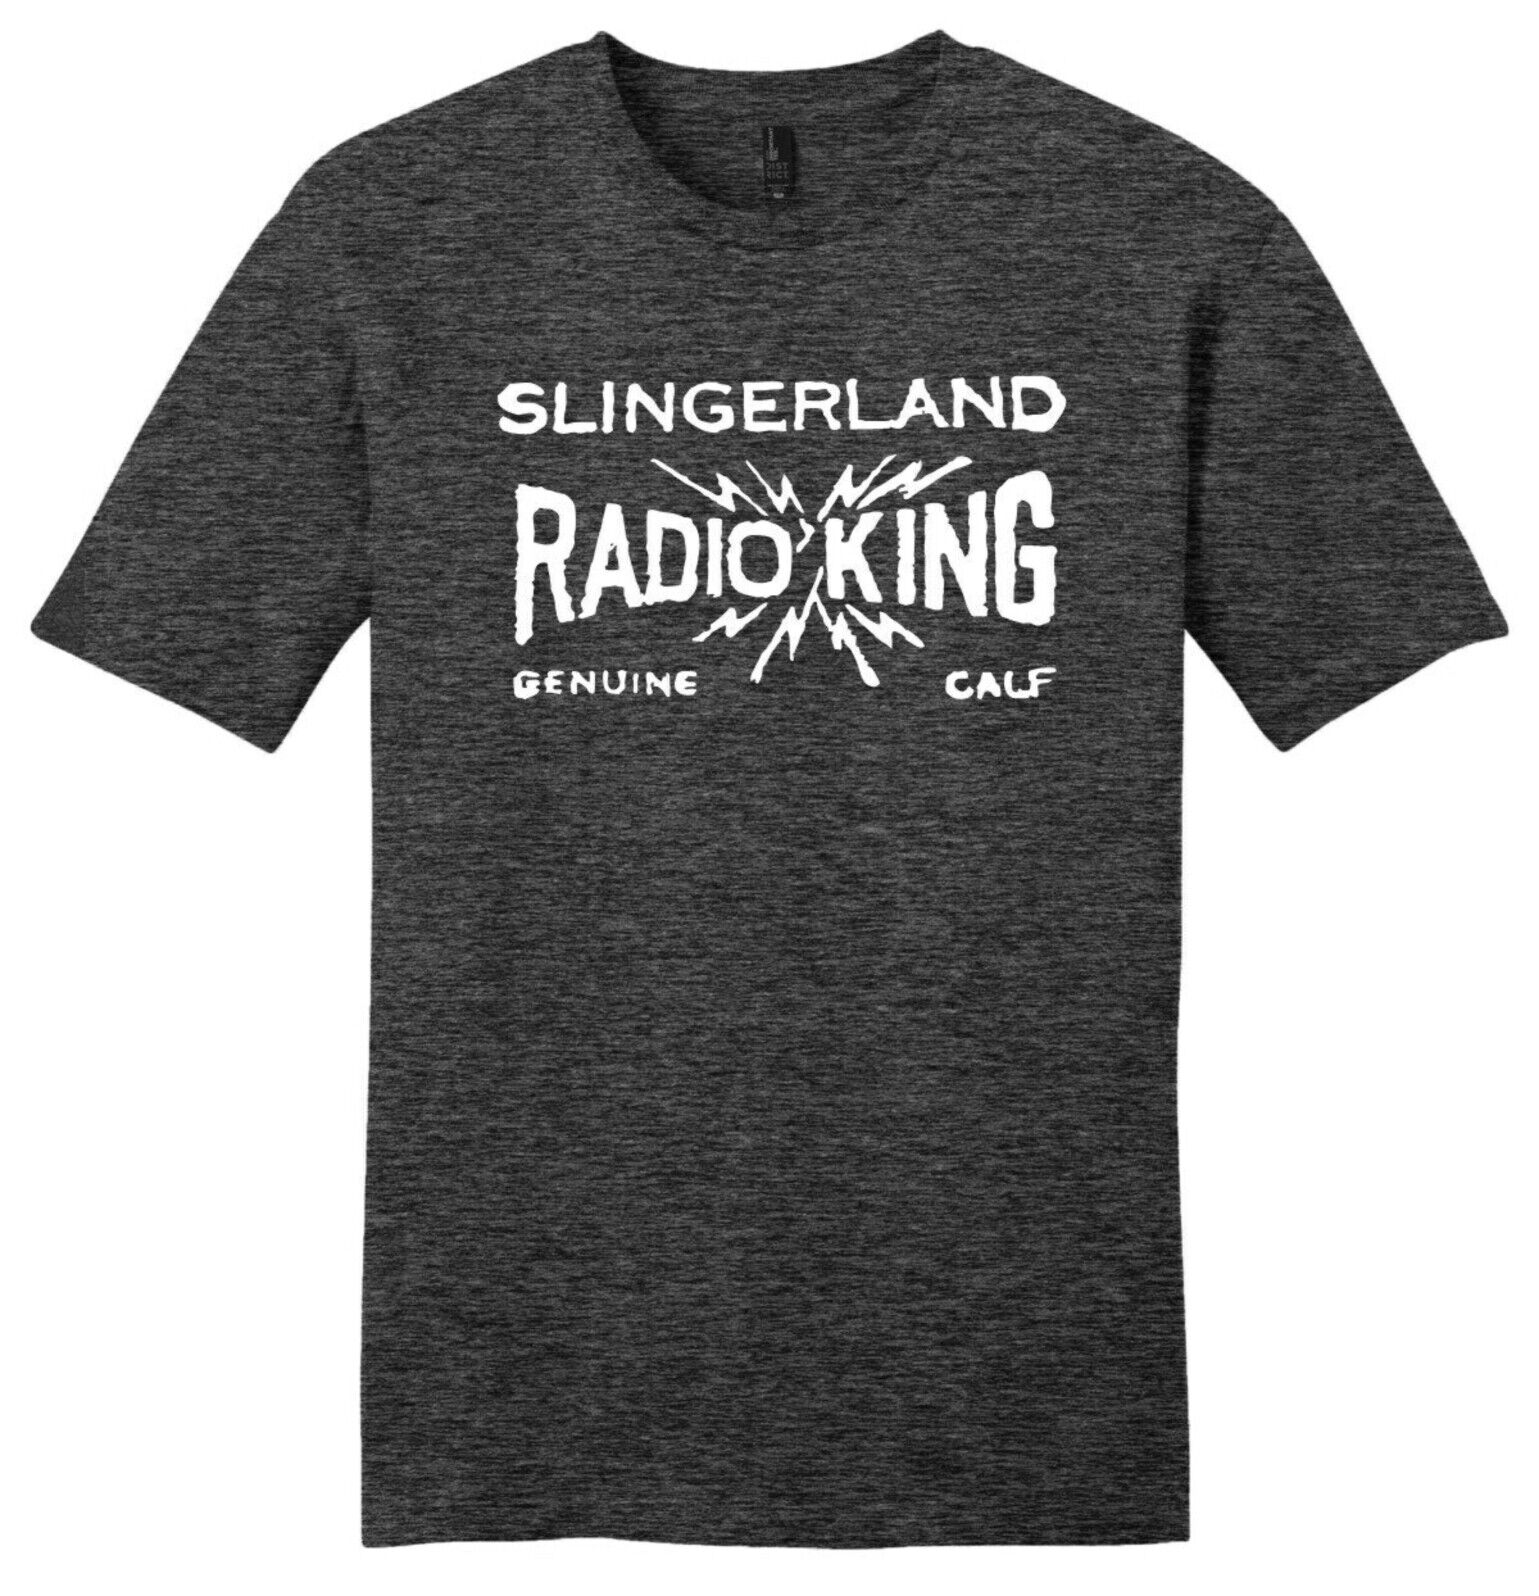 Slingerland Radio King Genuine Calf Vintage TRI-BLEND Tee Shirt - Black Heather